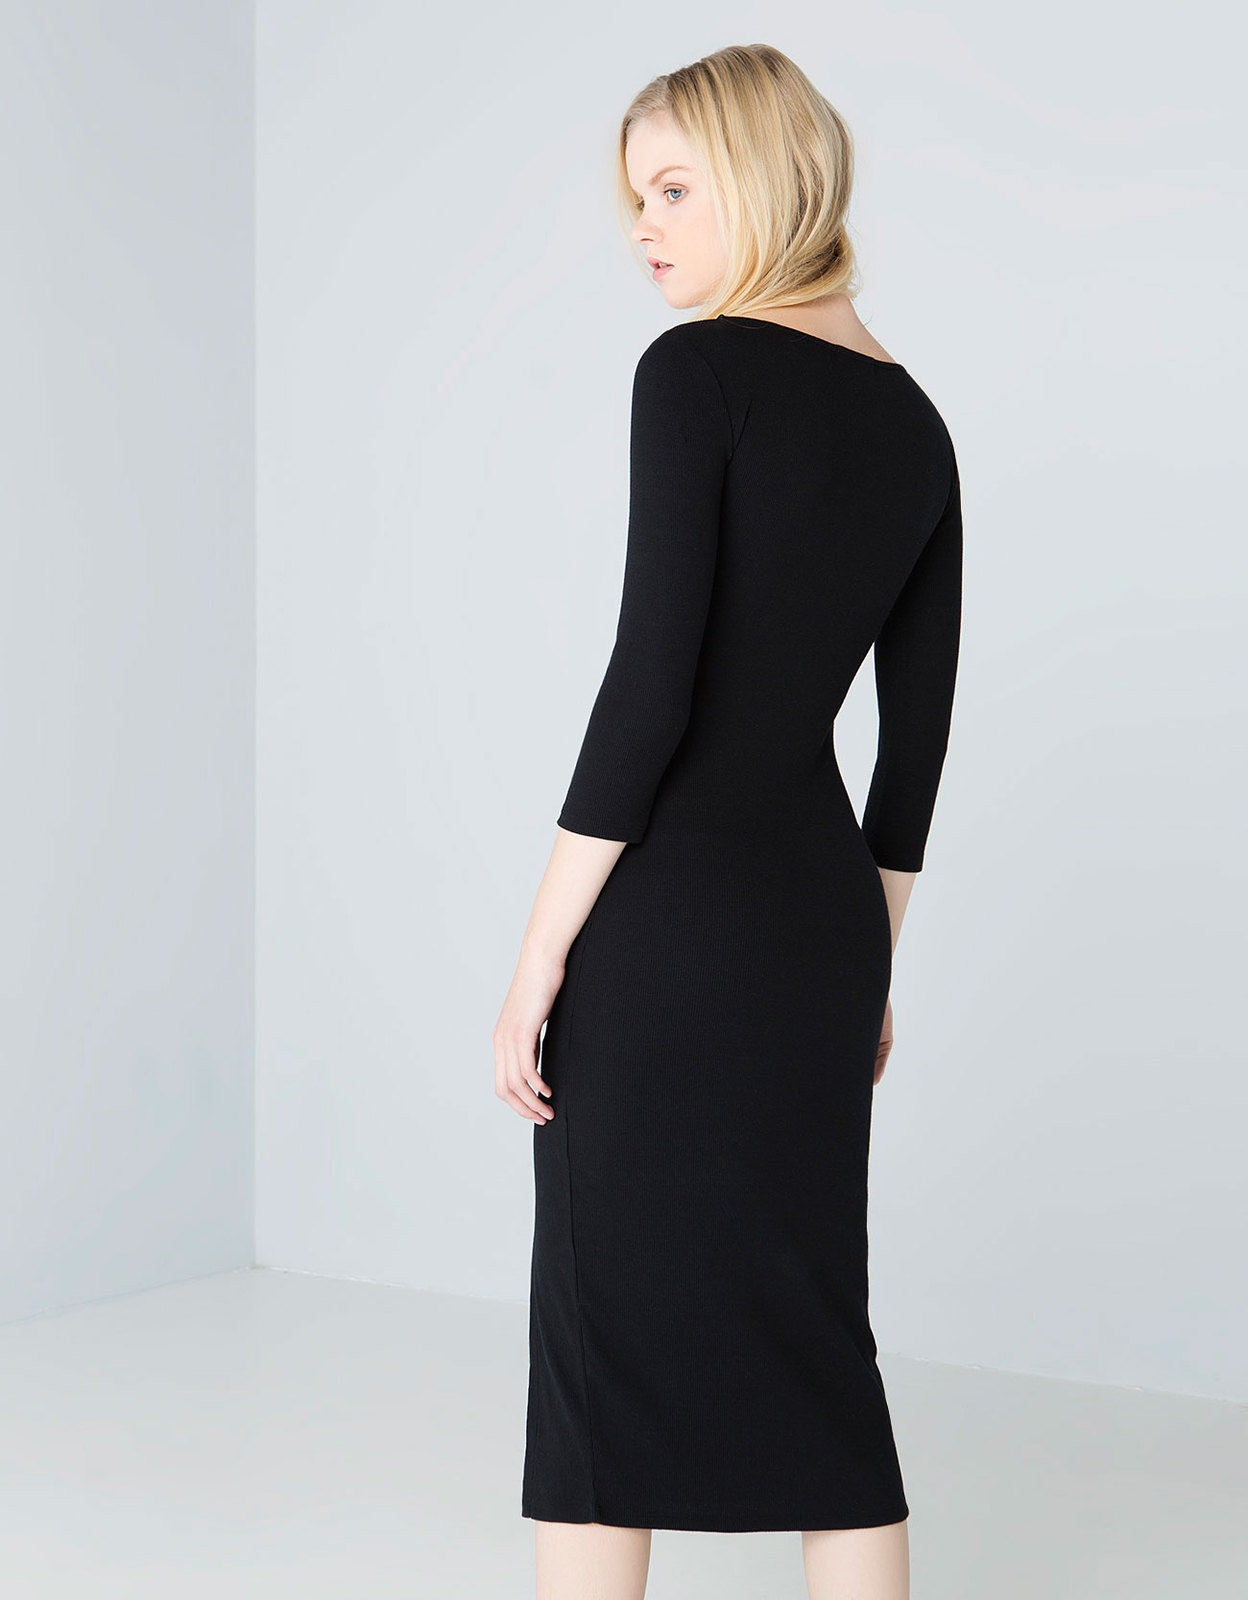 Bershka oldalt sliccelt fekete szűk ruha 2015 fotója